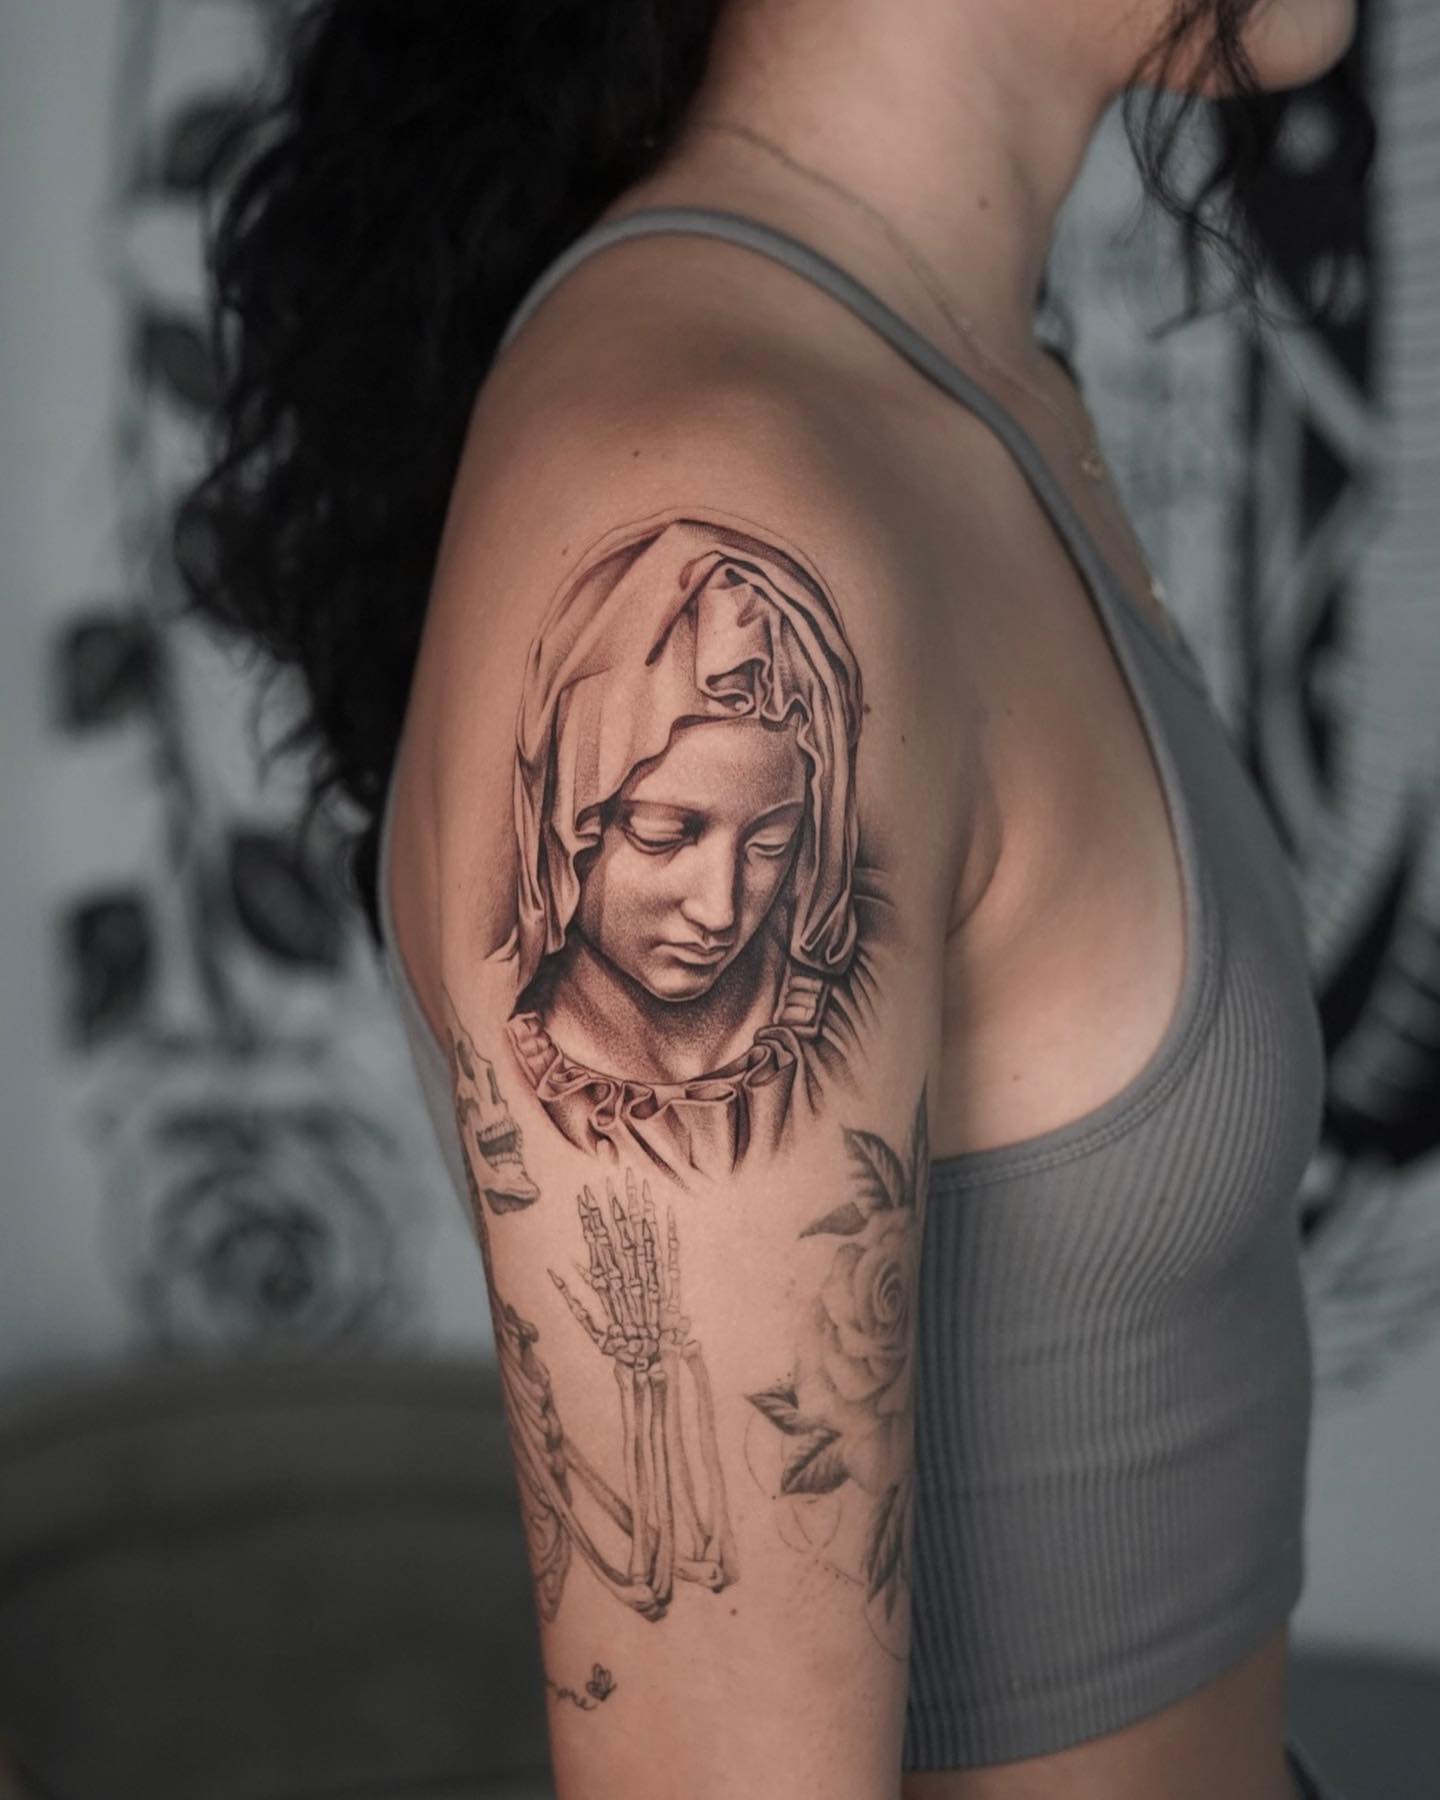 Tatuaje de retrato de La Virgen de Guadalupe